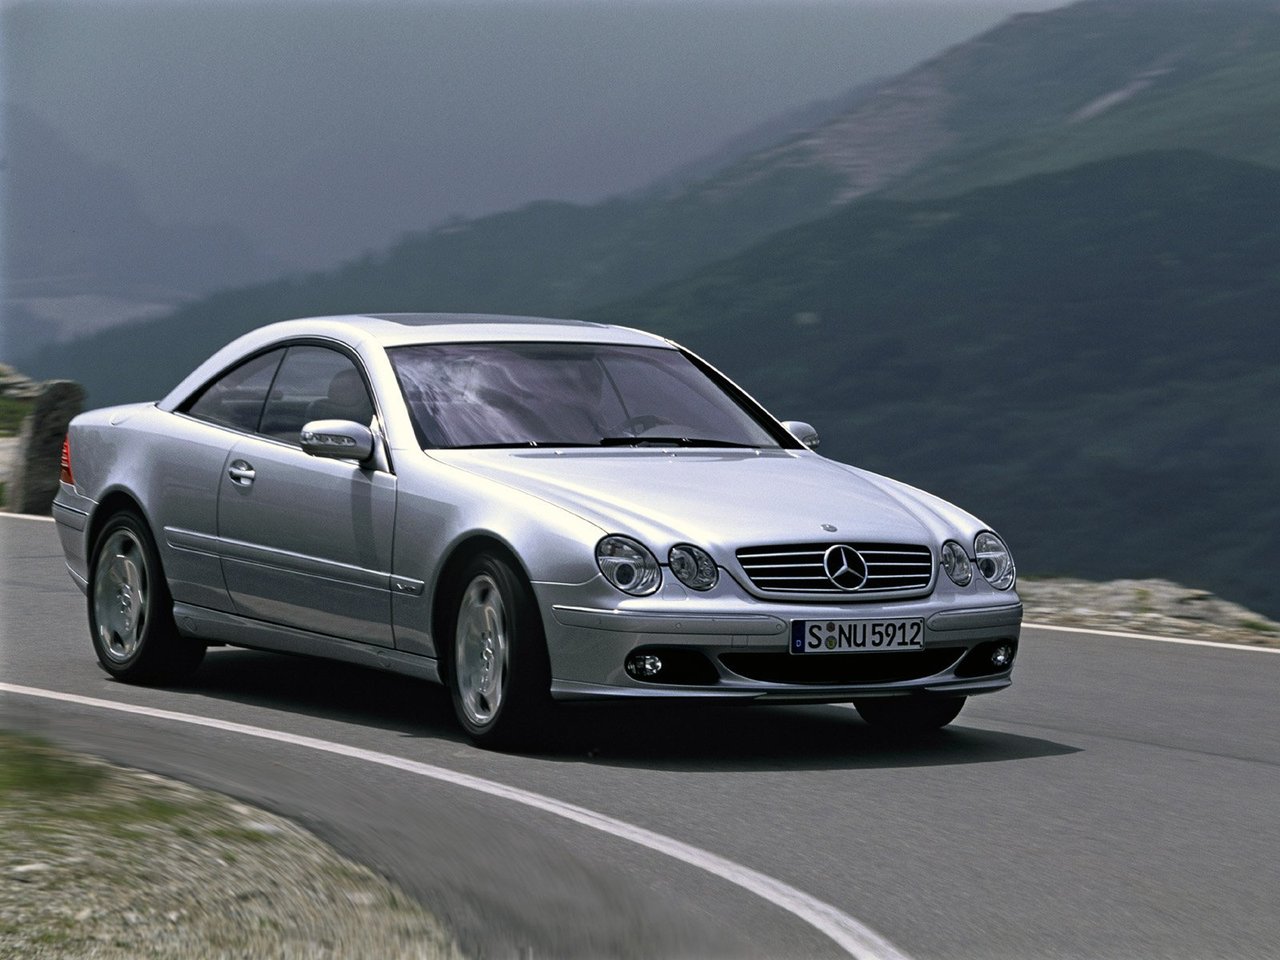 Расход газа двух комплектаций купе-хардтопа Mercedes-Benz CL-klasse. Разница стоимости заправки газом и бензином. Автономный пробег до и после установки ГБО.